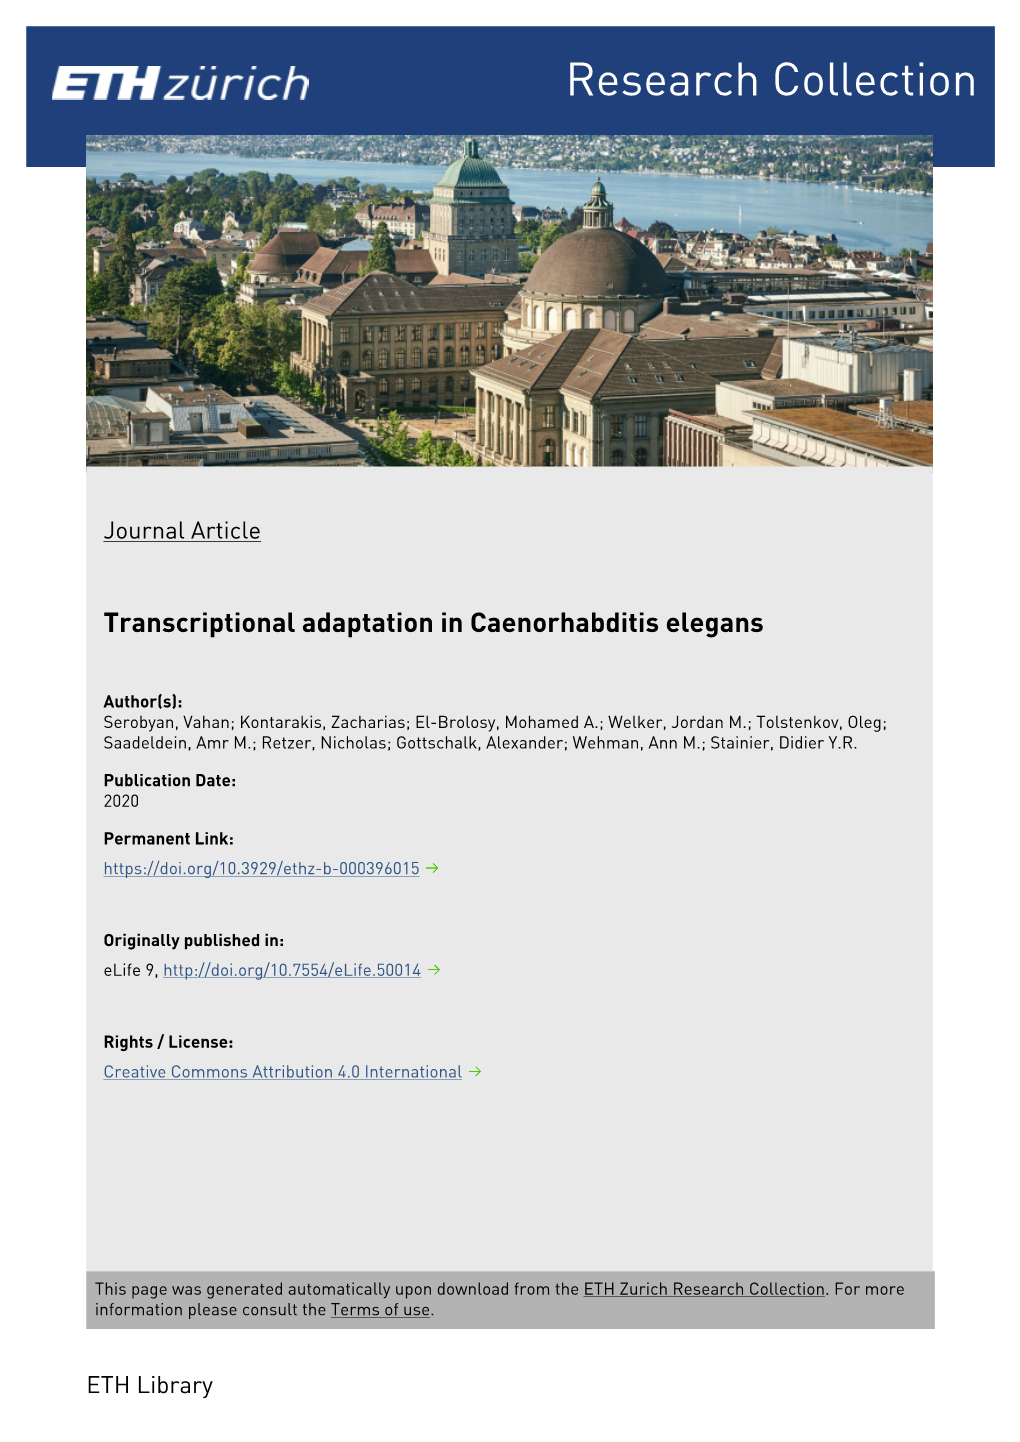 Transcriptional Adaptation in Caenorhabditis Elegans